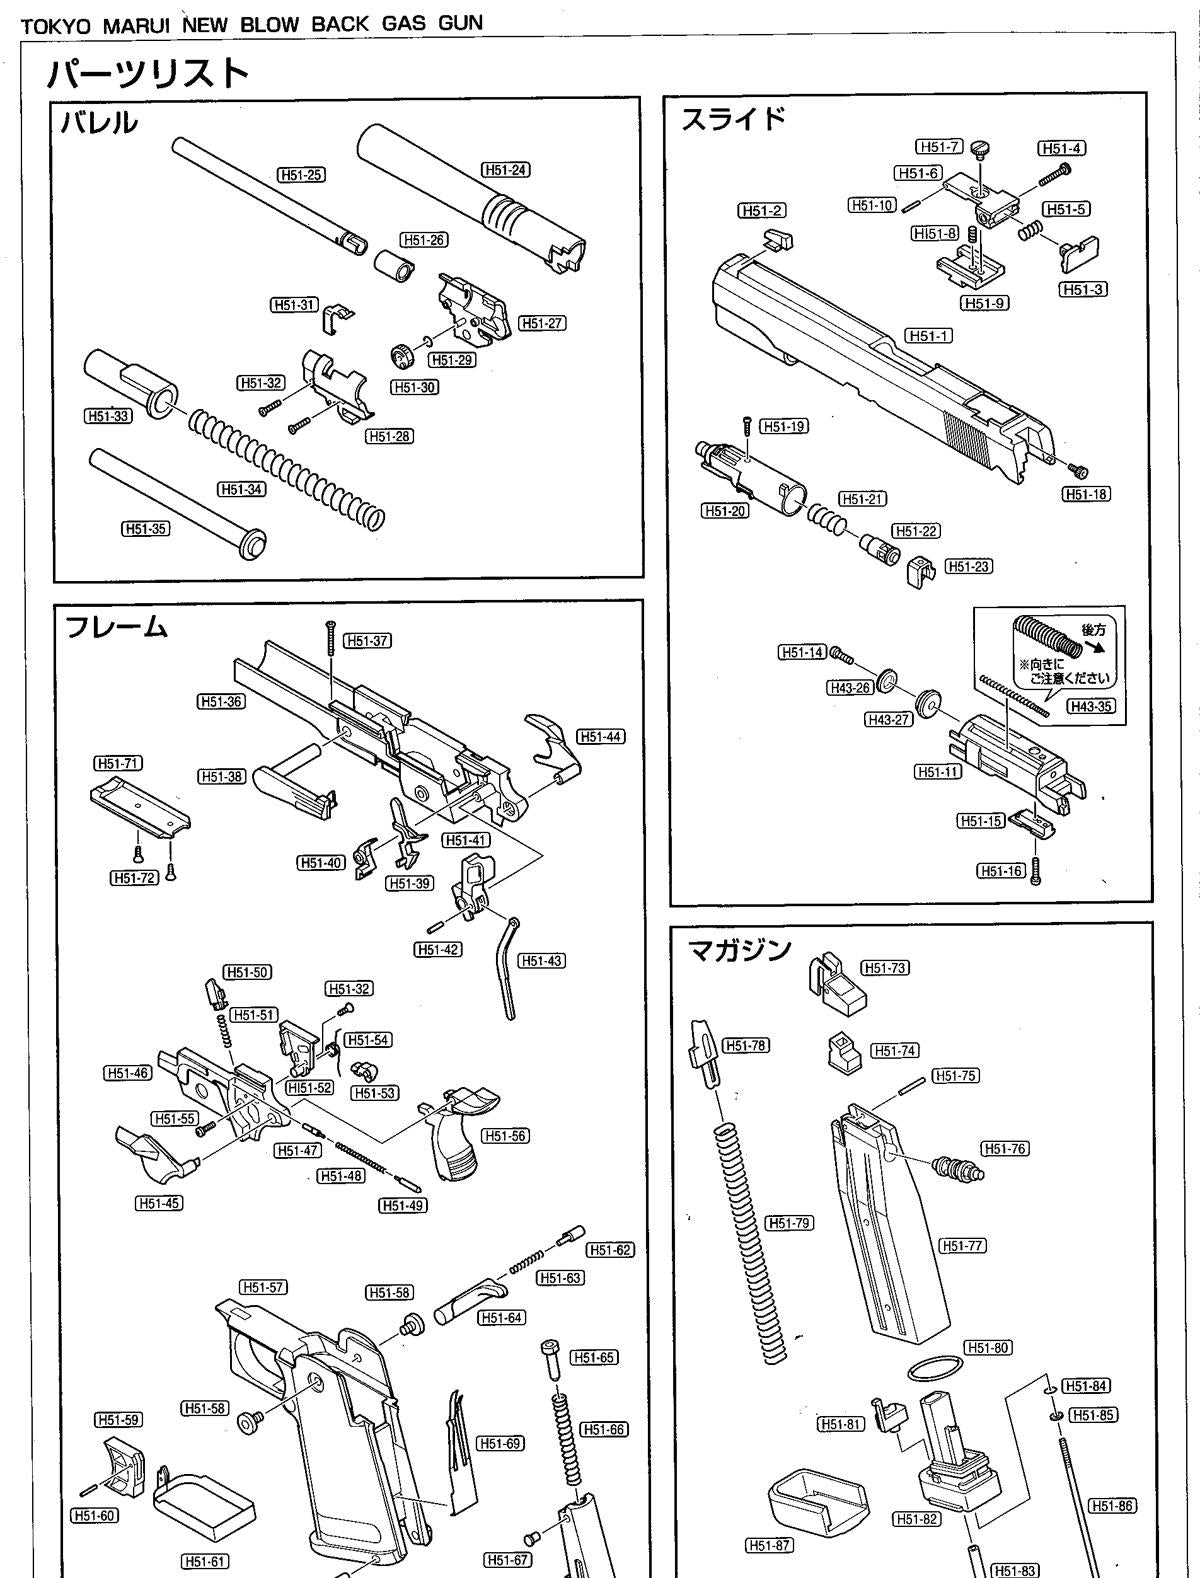 Tokyo Marui Hi-Capa - Part H51-18 - BBU rear mounting screw - Ebog Designs